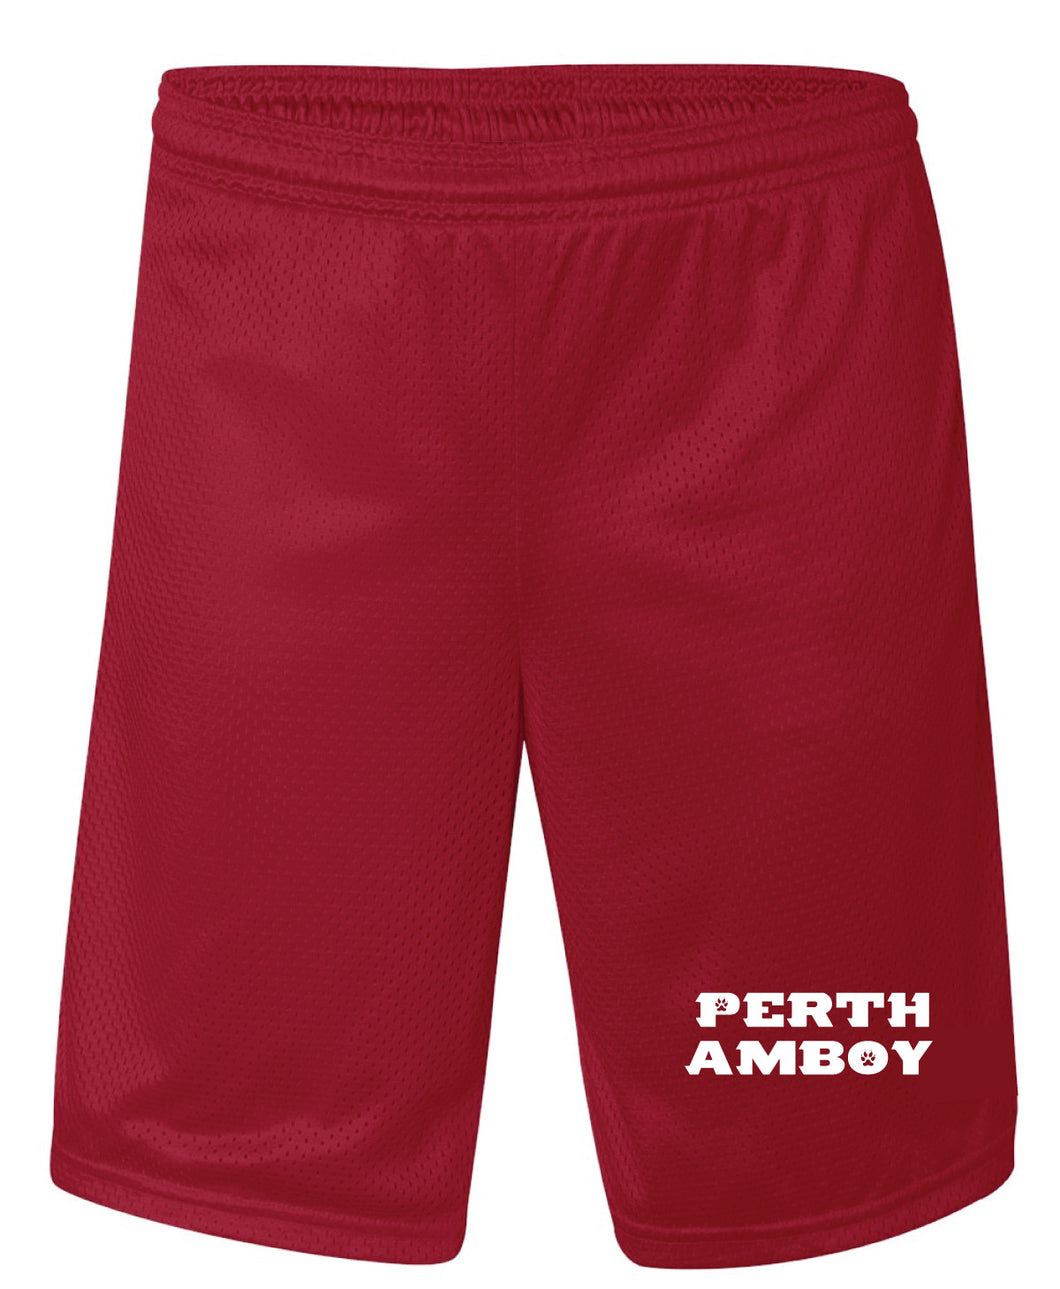 Perth Amboy Tech Shorts - 5KounT